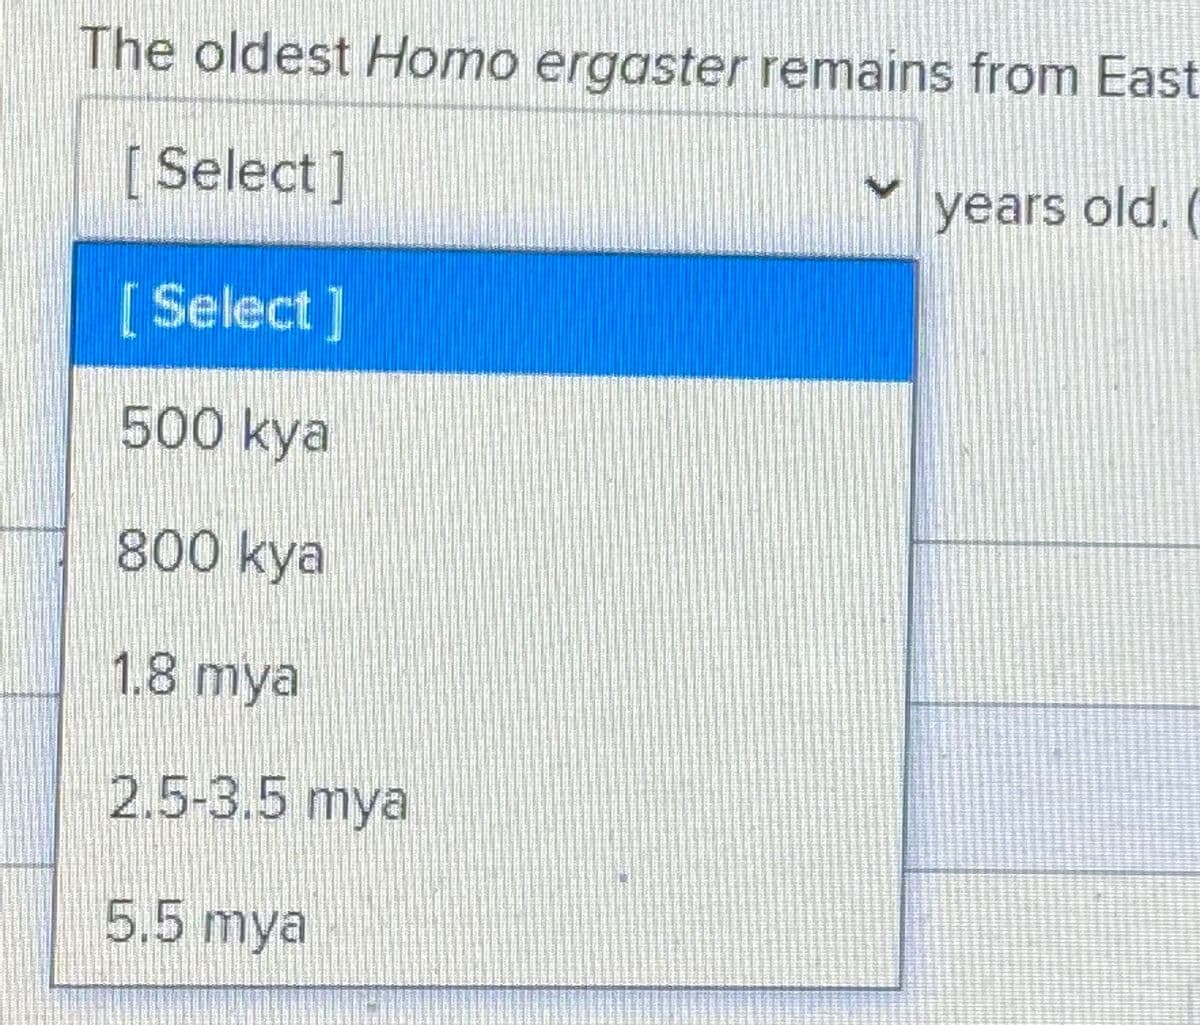 The oldest Homo ergaster remains from East
[ Select]
years old. (
[ Select]
500 kya
800 kya
1.8 mya
2.5-3.5 mya
5.5 mya
